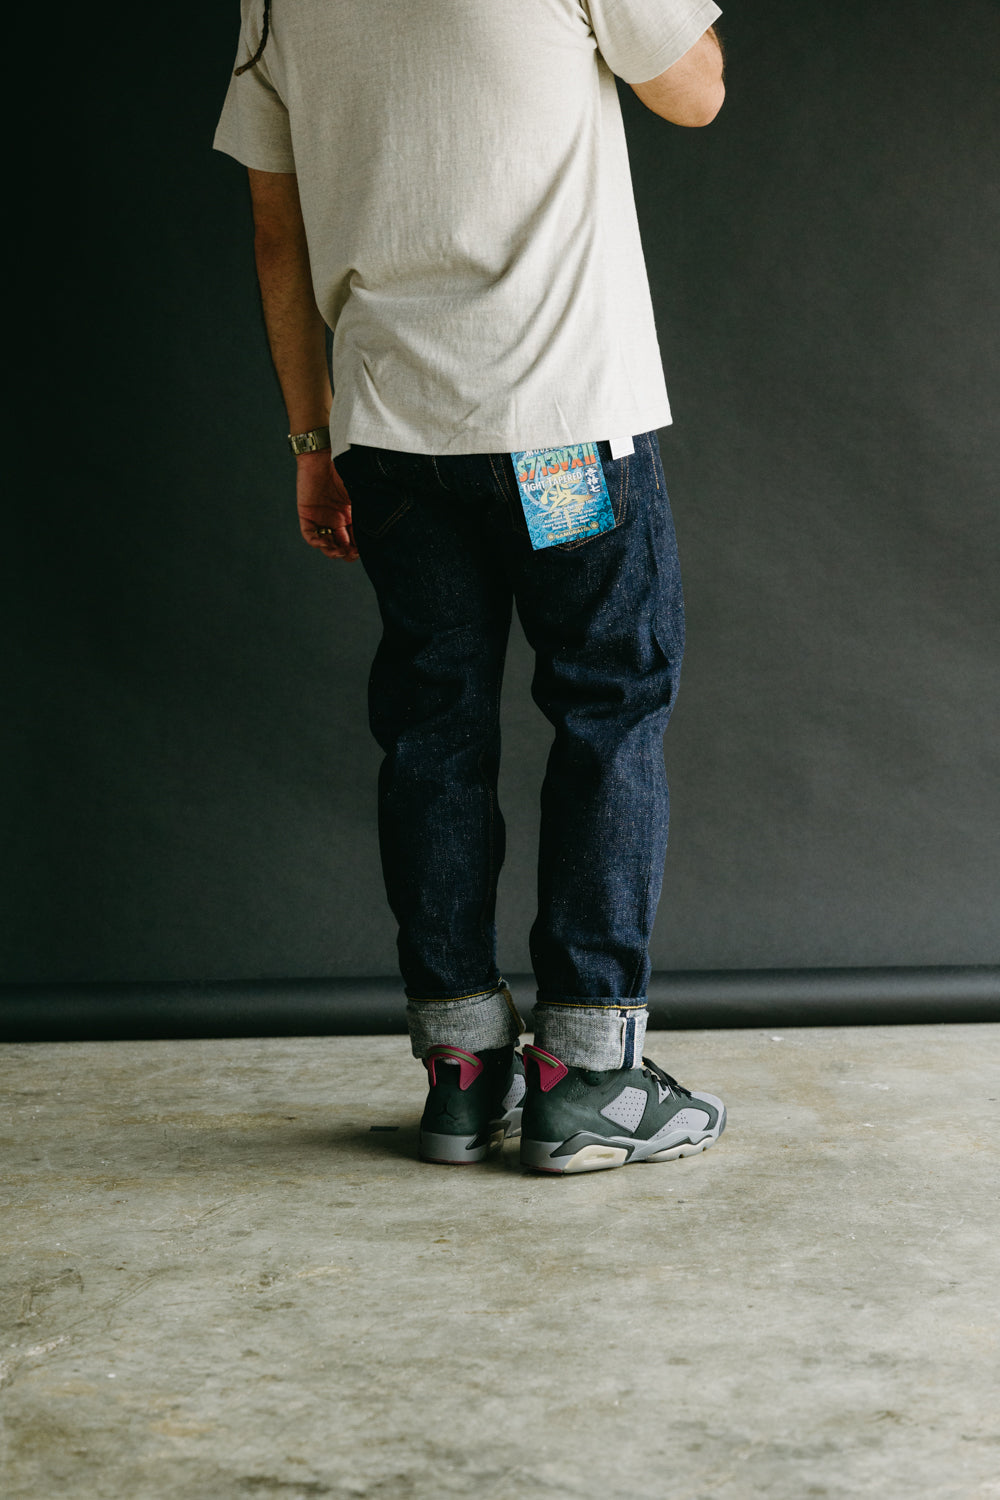 S713VX-II - 17oz Bushido Selvedge Denim Jeans - Slim Tapered O/W